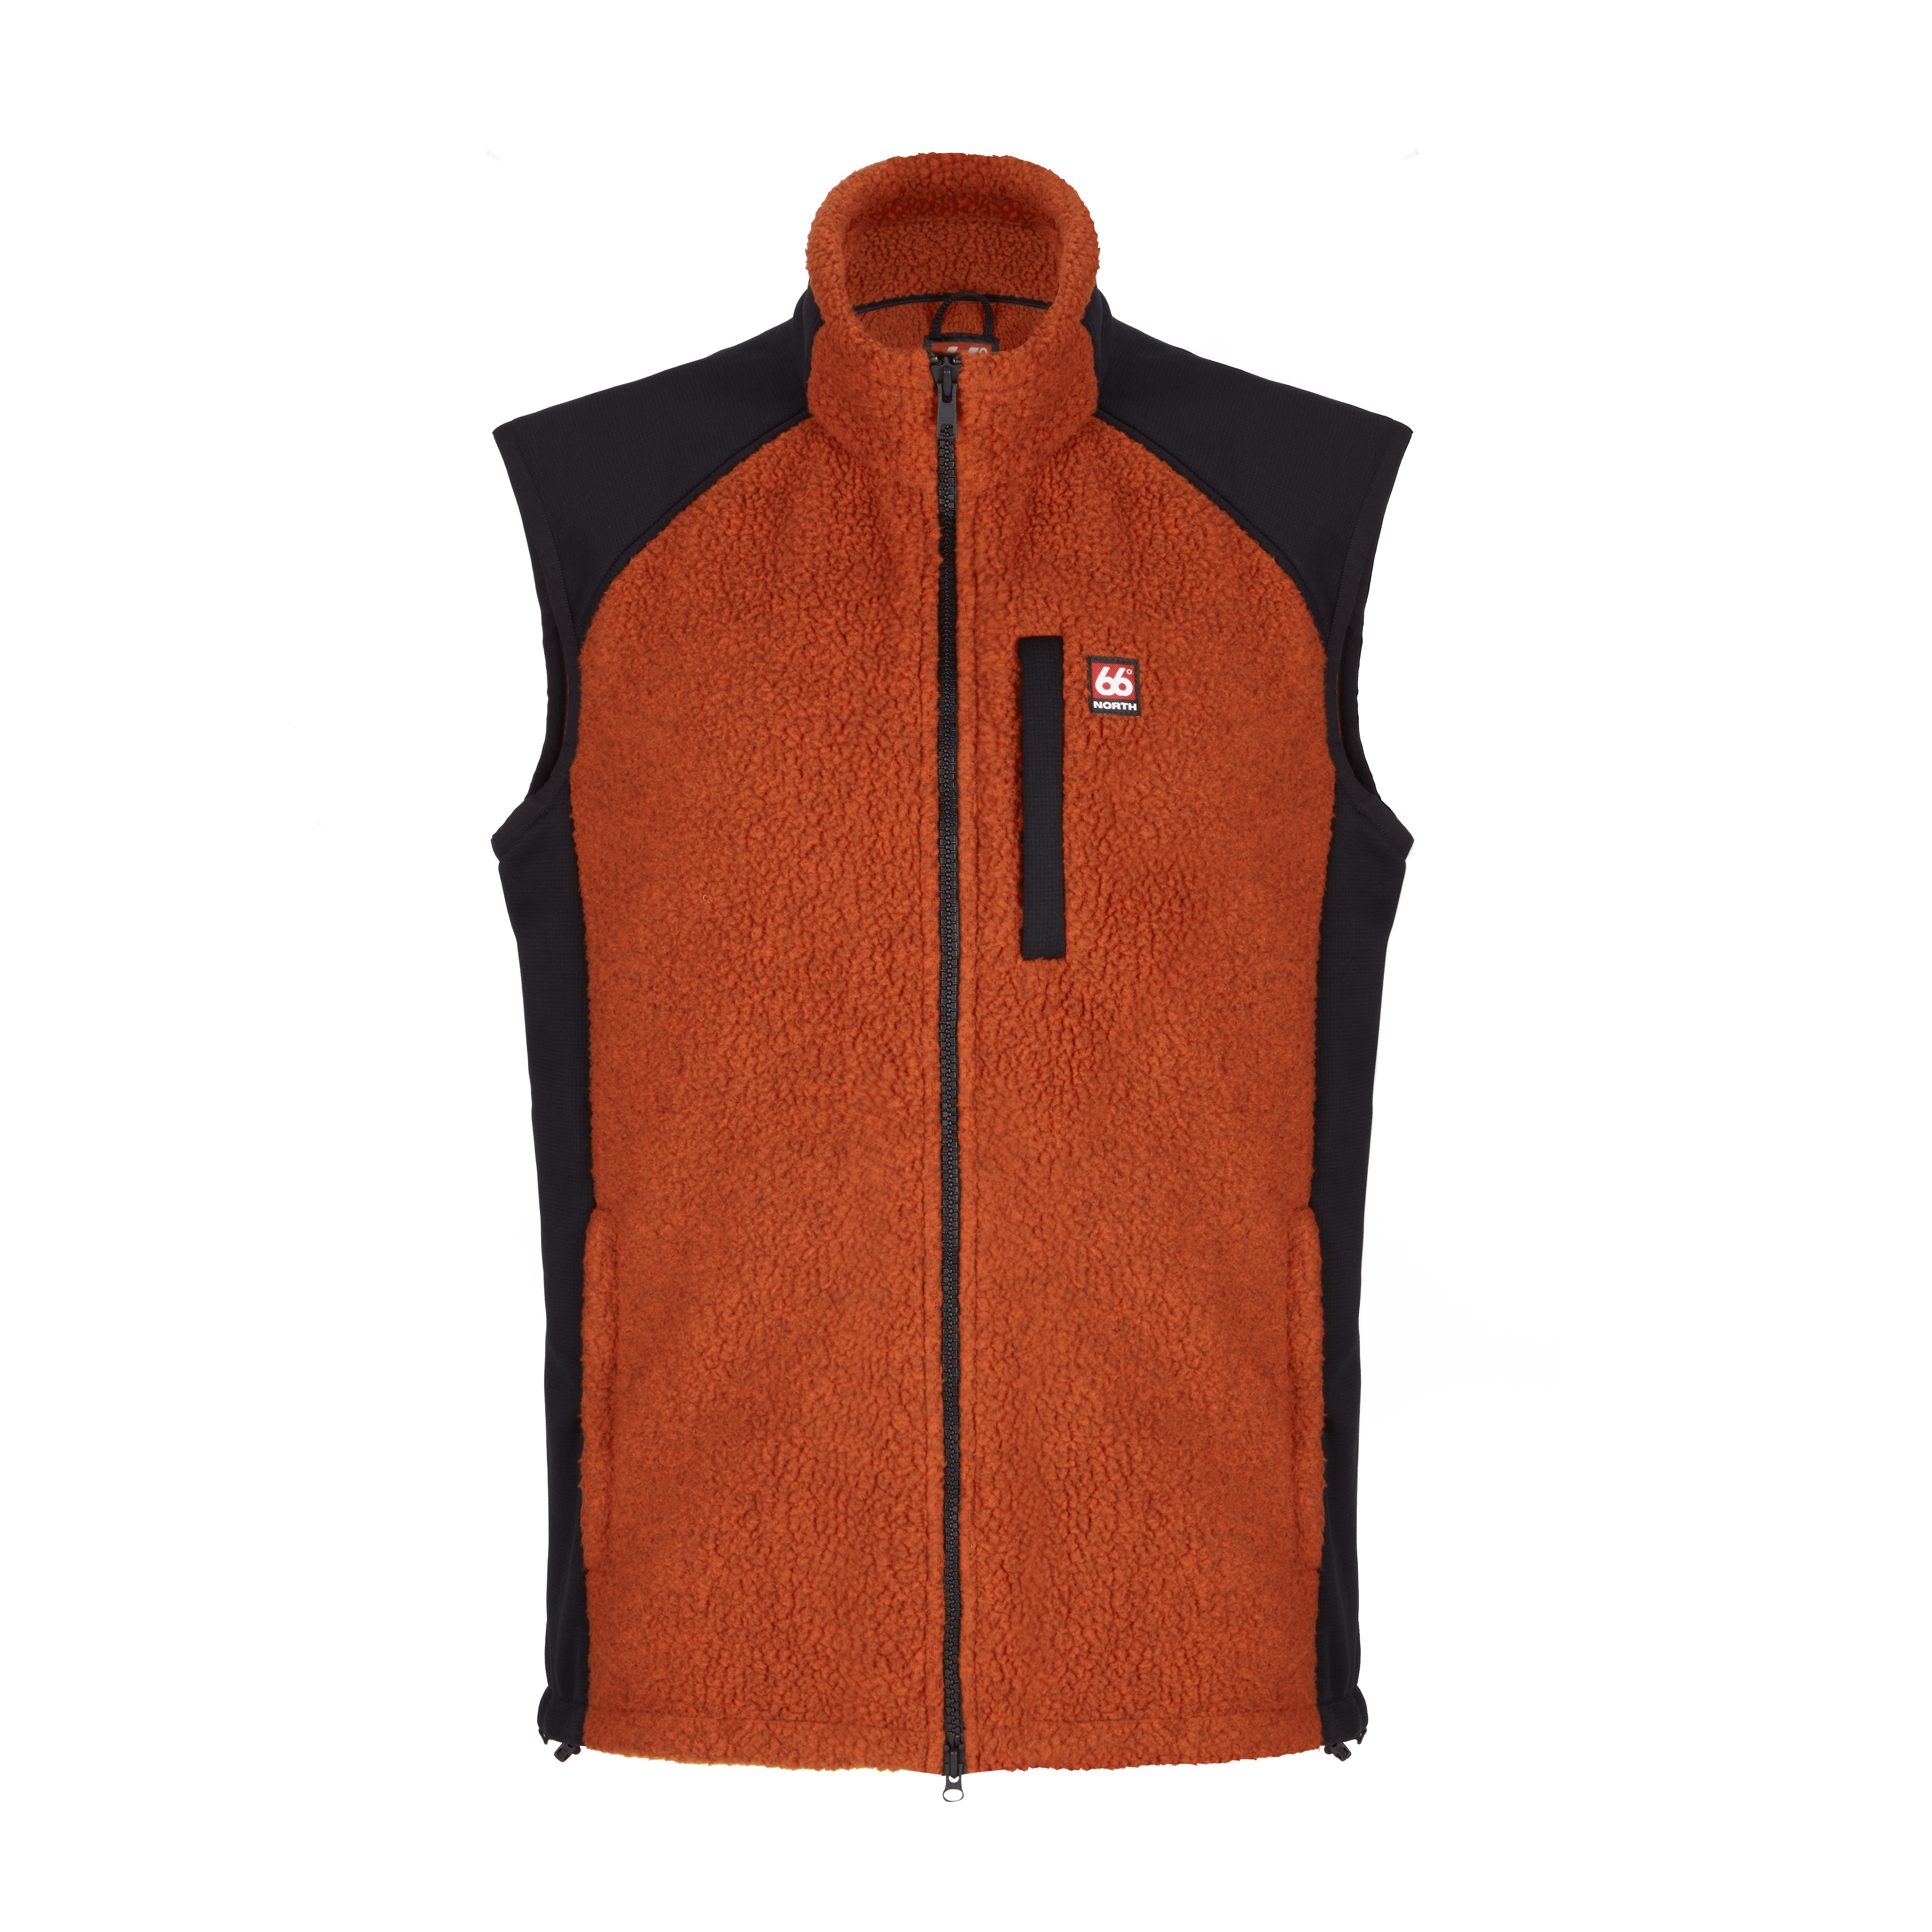 66 North Men's Tindur Tops & Vests - Orange Rust - M